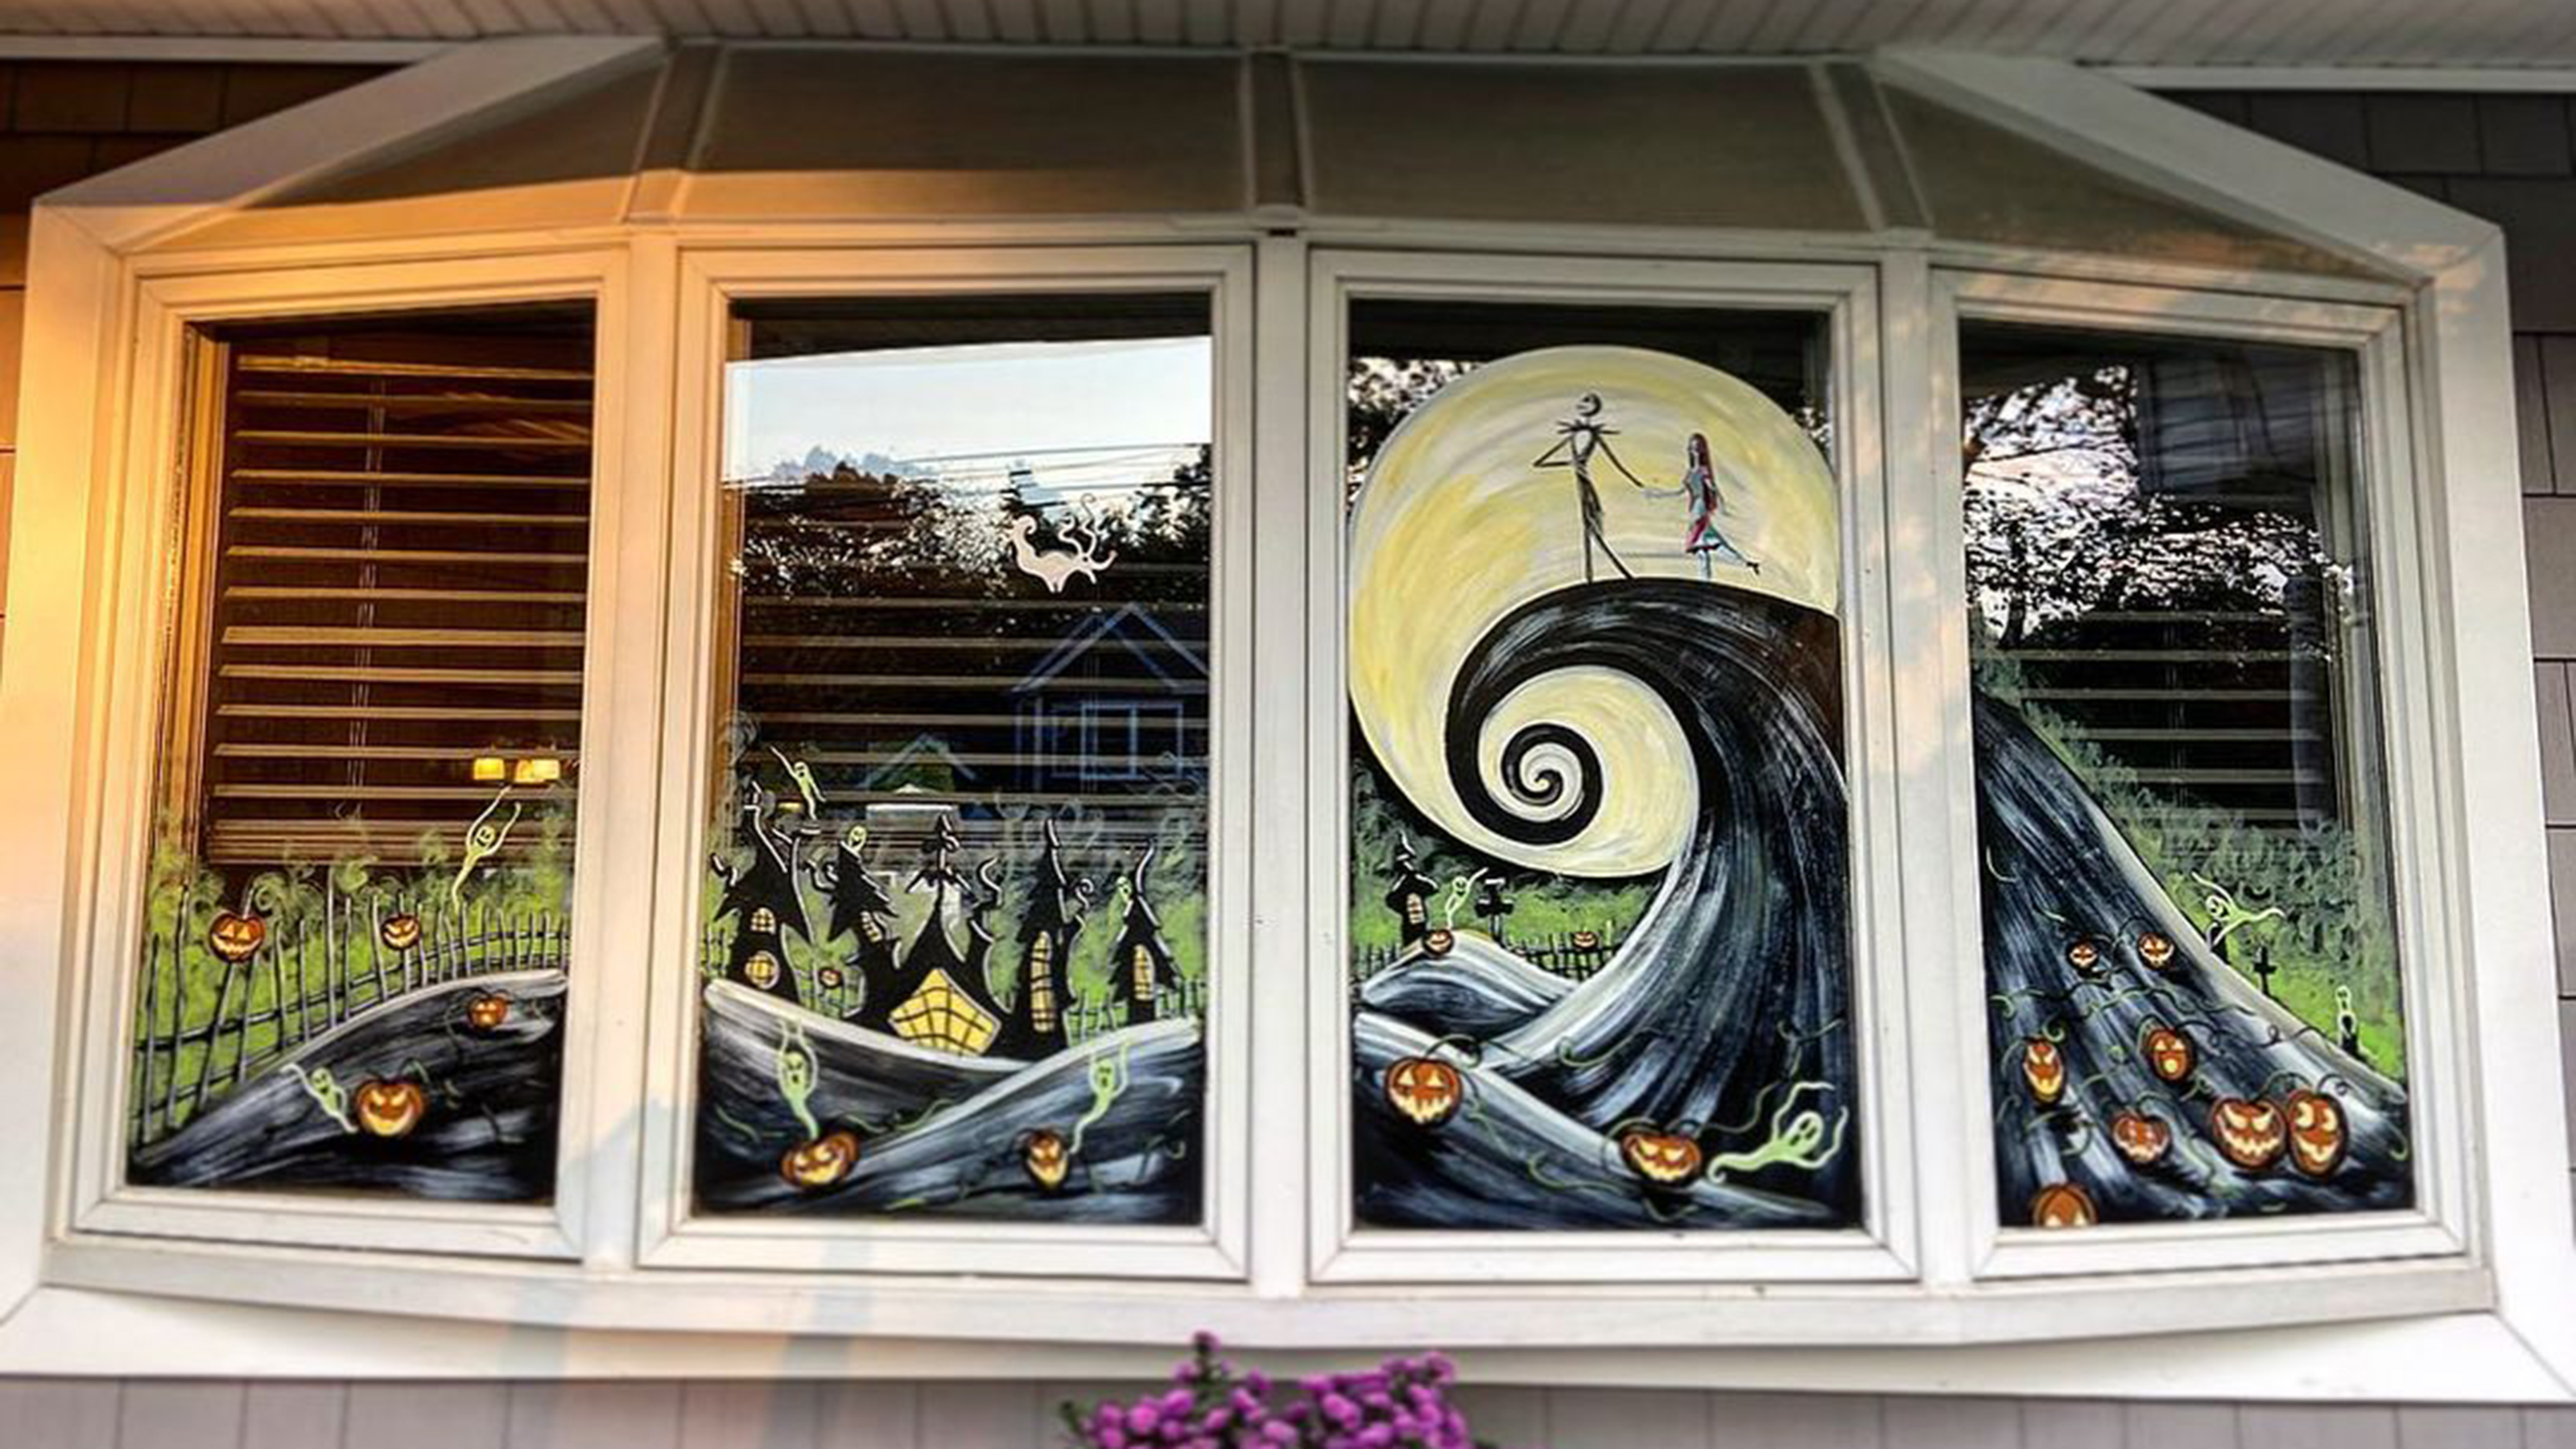 malt Goneryl bottle 14 halloween window ideas for a spooky display | Real Homes